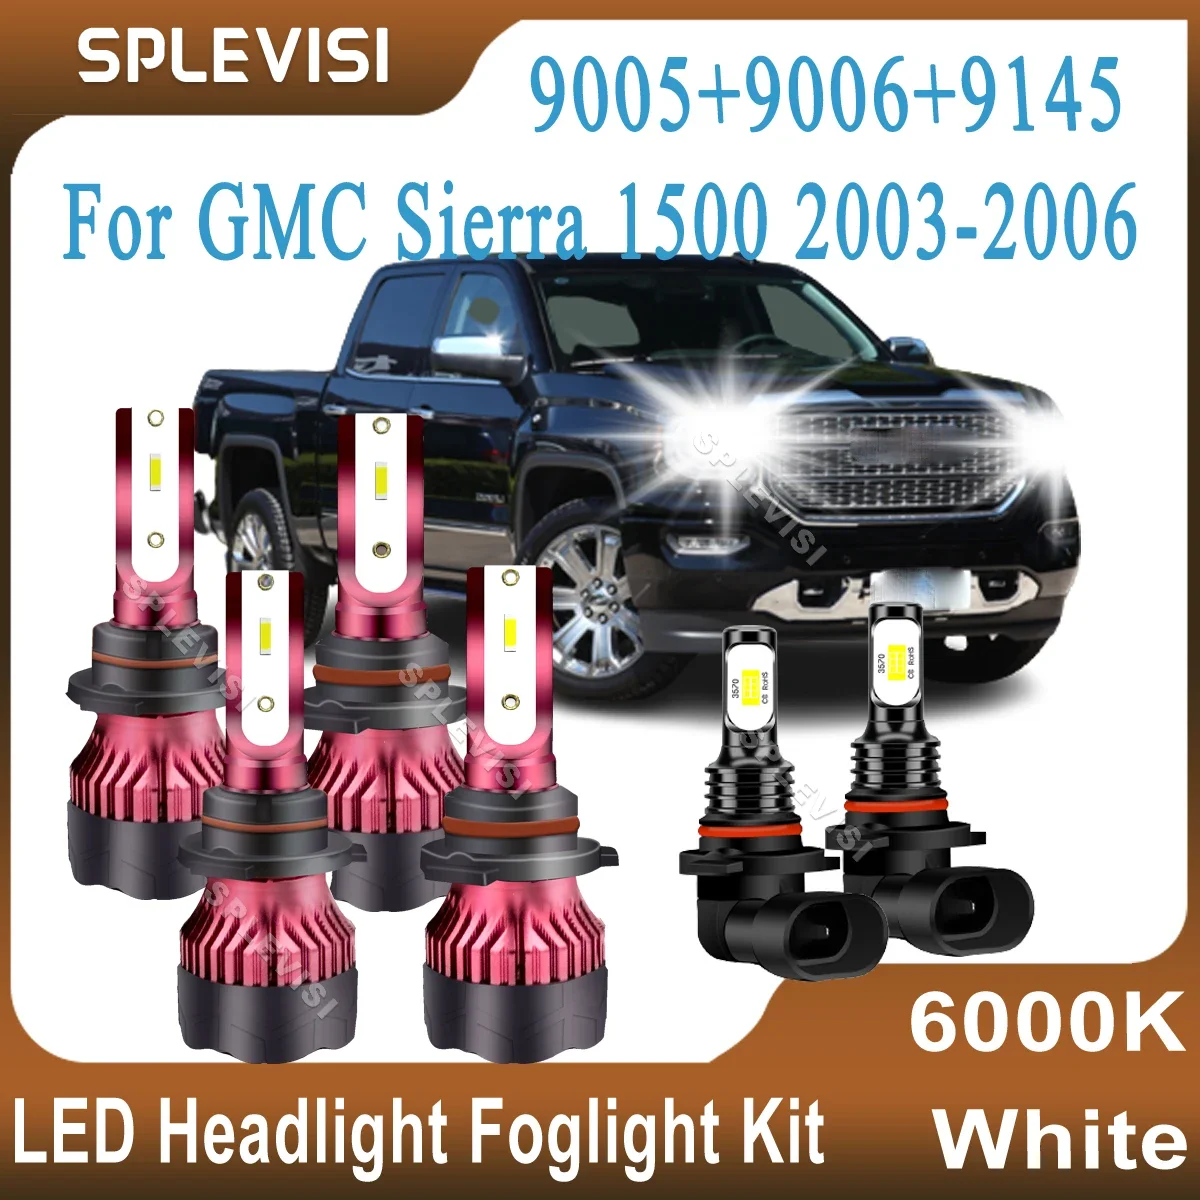 

4x LED Headlight 9005 High 9006 Low Beam +2x 9145 LED Foglight Kit 470W Pure White Combo For GMC Sierra 1500 2003 2004 2005 2006